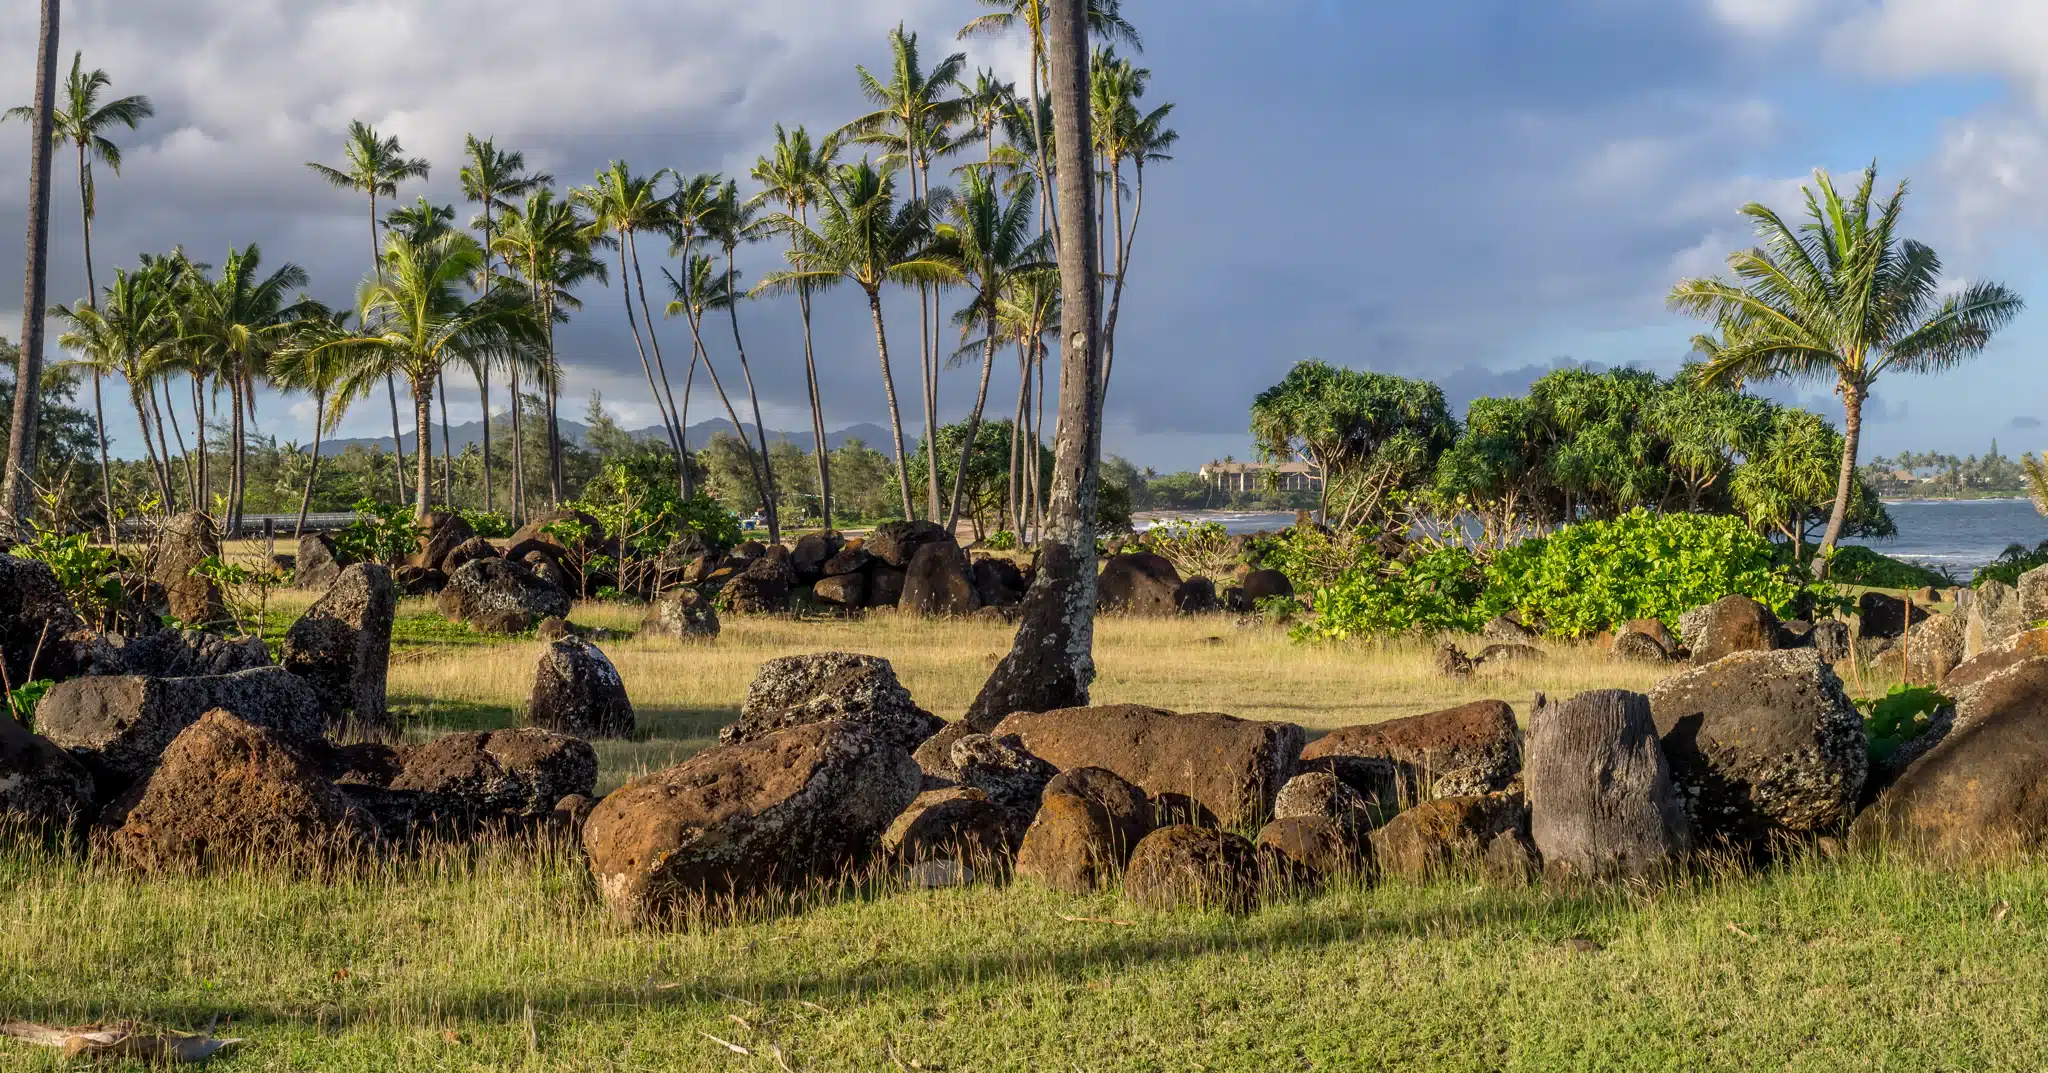 Wailua Complex of Heiaus is a Heritage Site located in the city of Wailua on Kauai, Hawaii